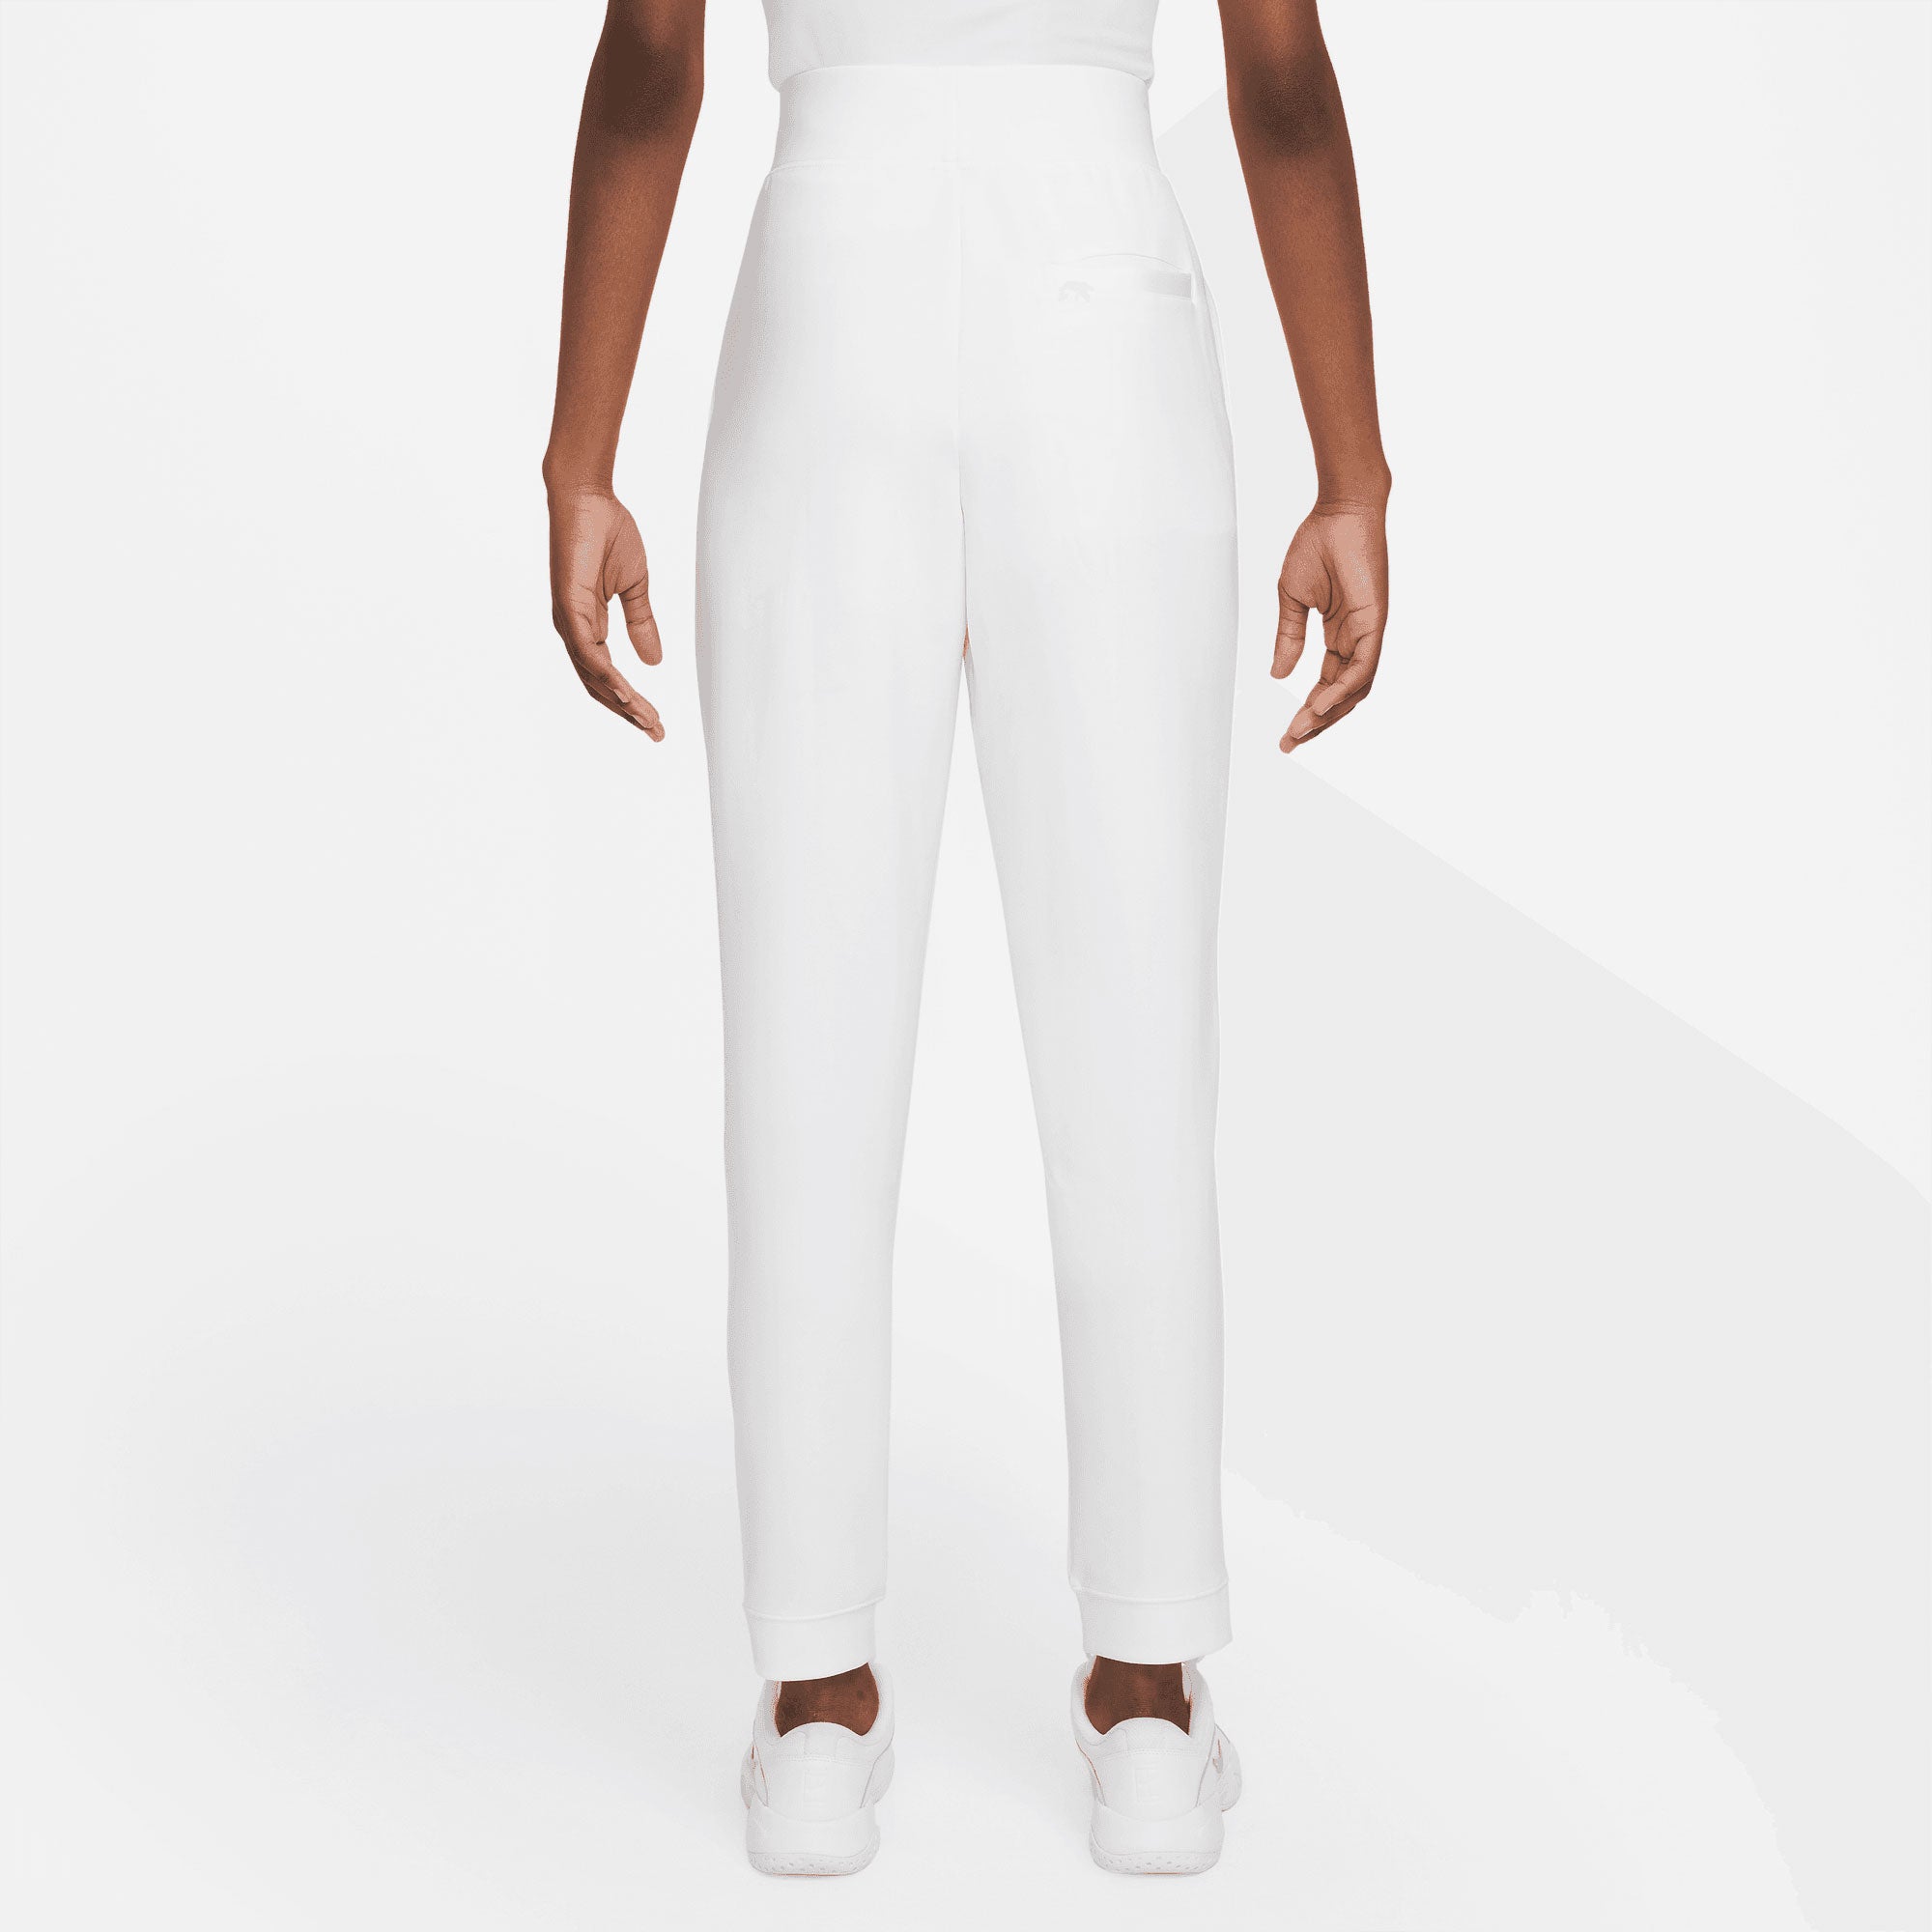 NikeCourt Dri-FIT Heritage Women's Knit Tennis Pants White (2)